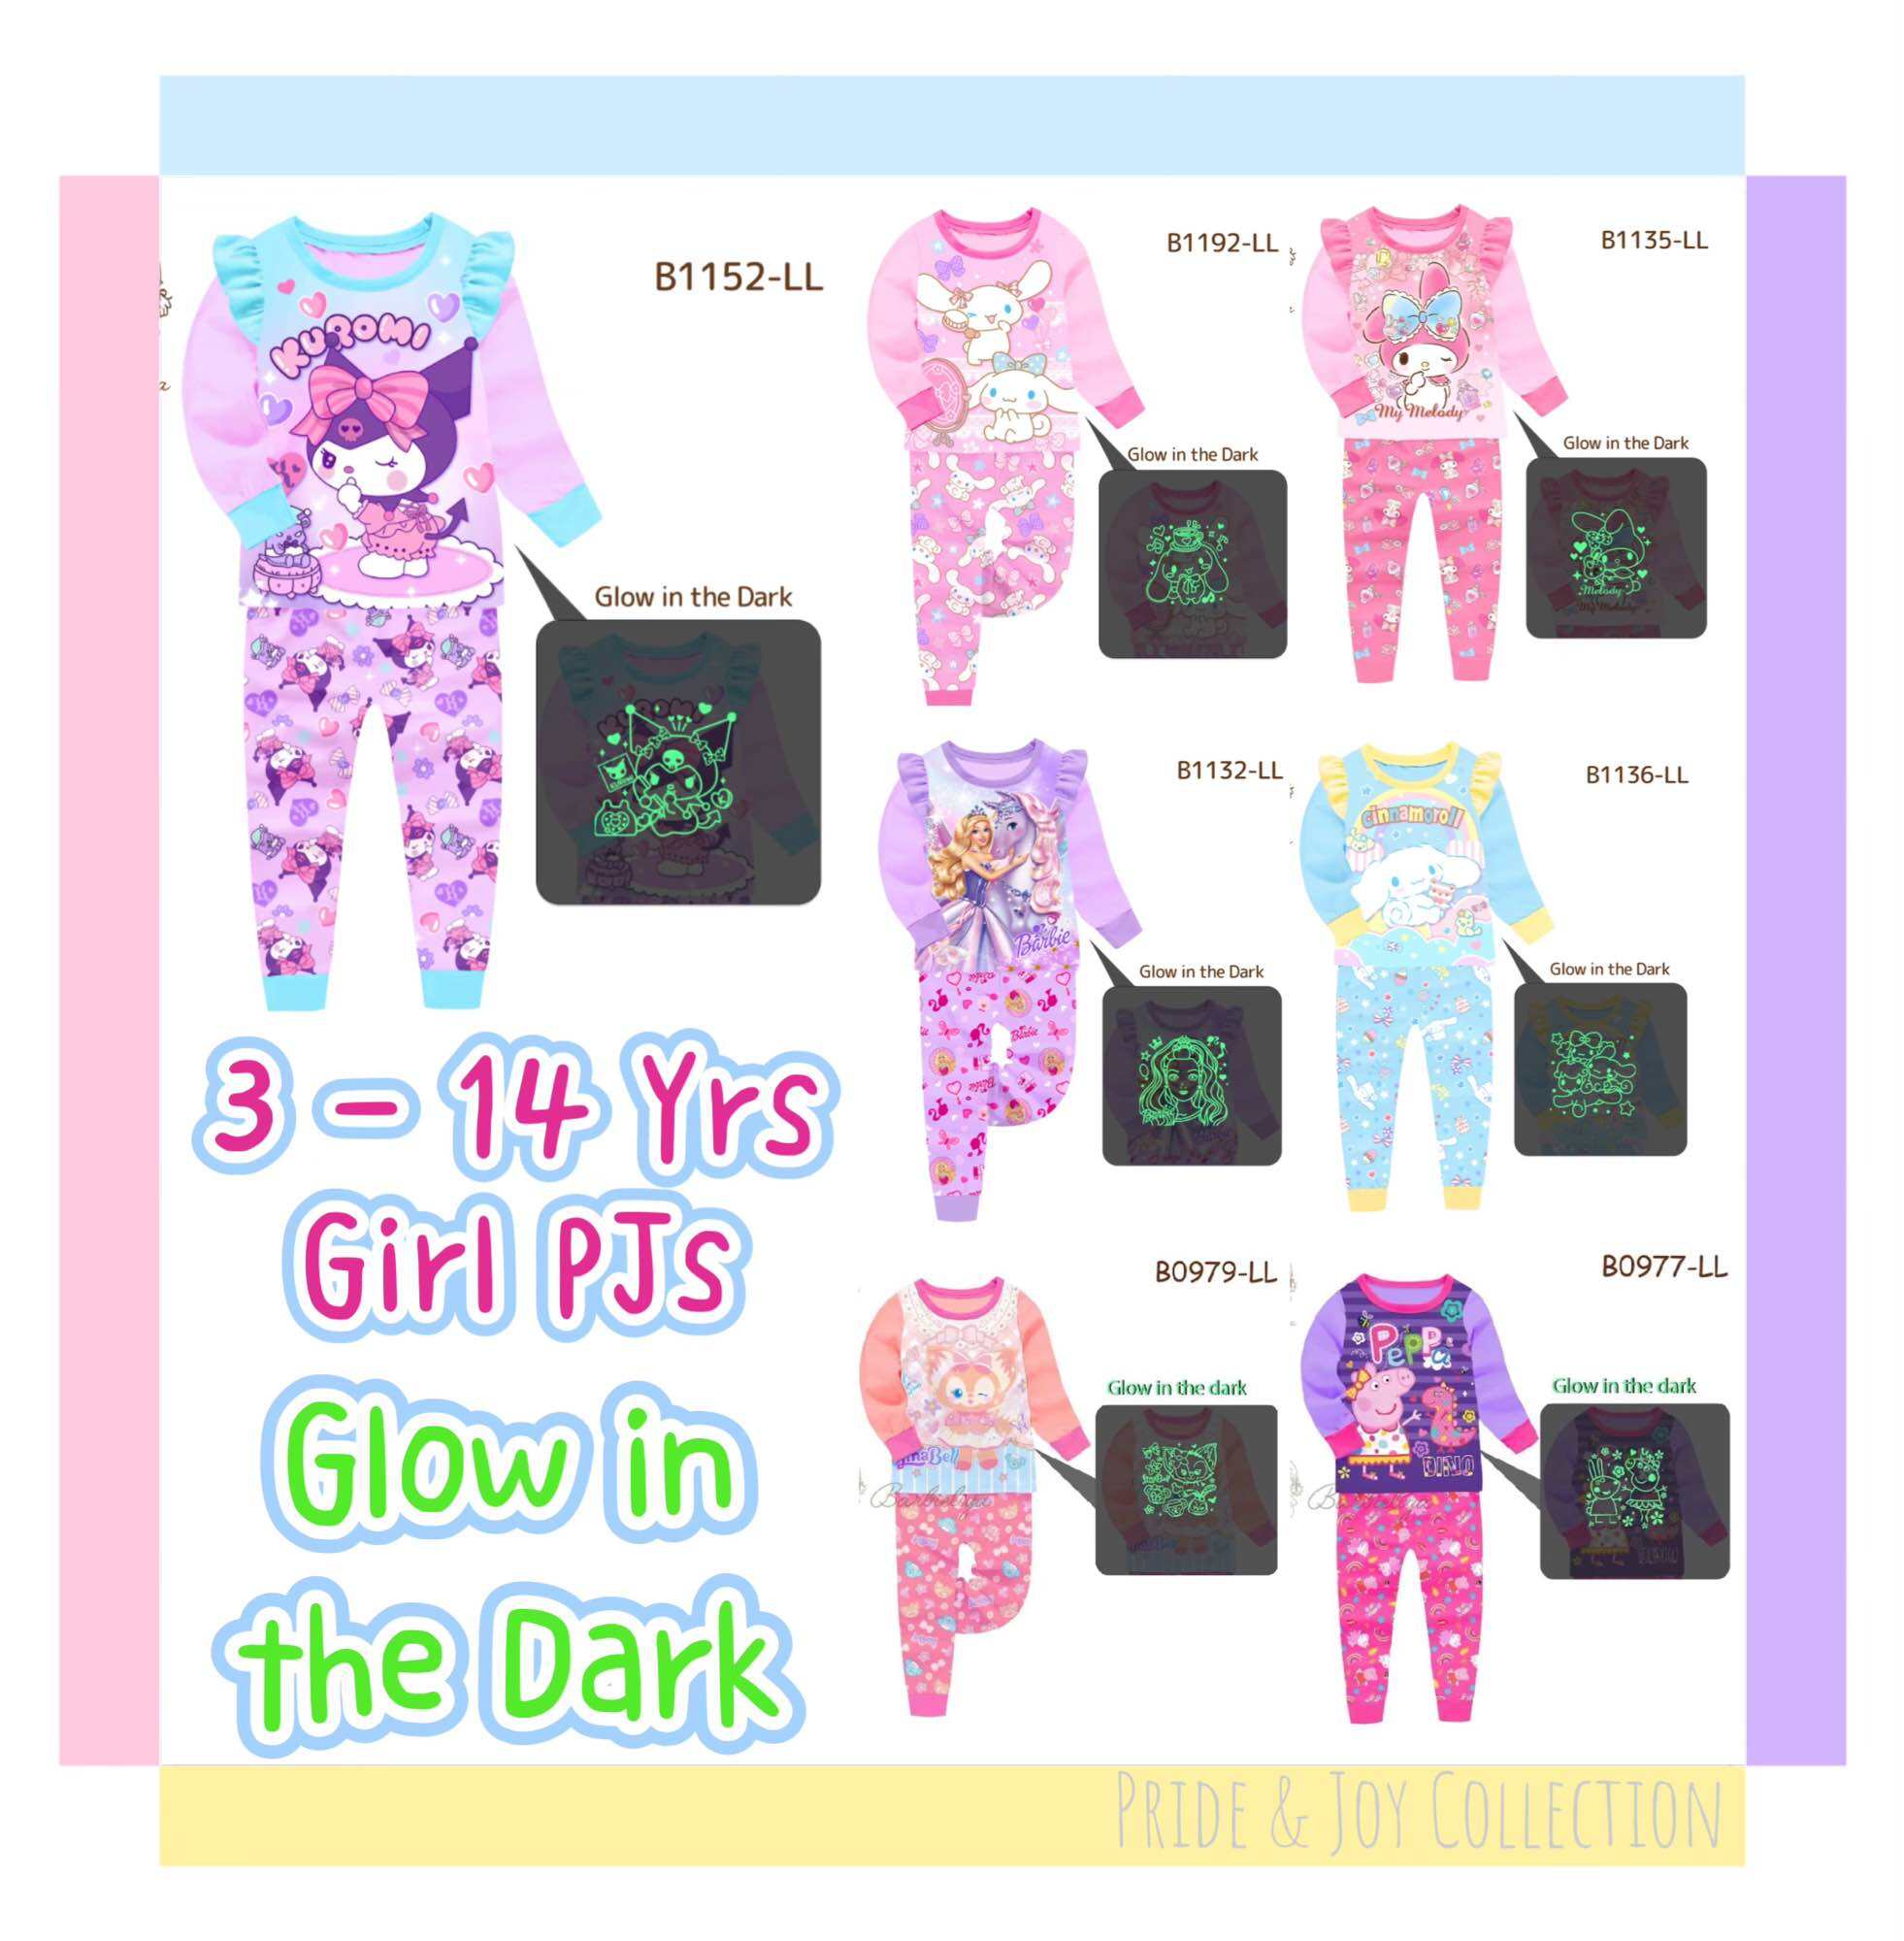 Panties & Bloomers, Dora - The Explorer, Girls, 9-12 Months - Inner Wear &  Thermals Online